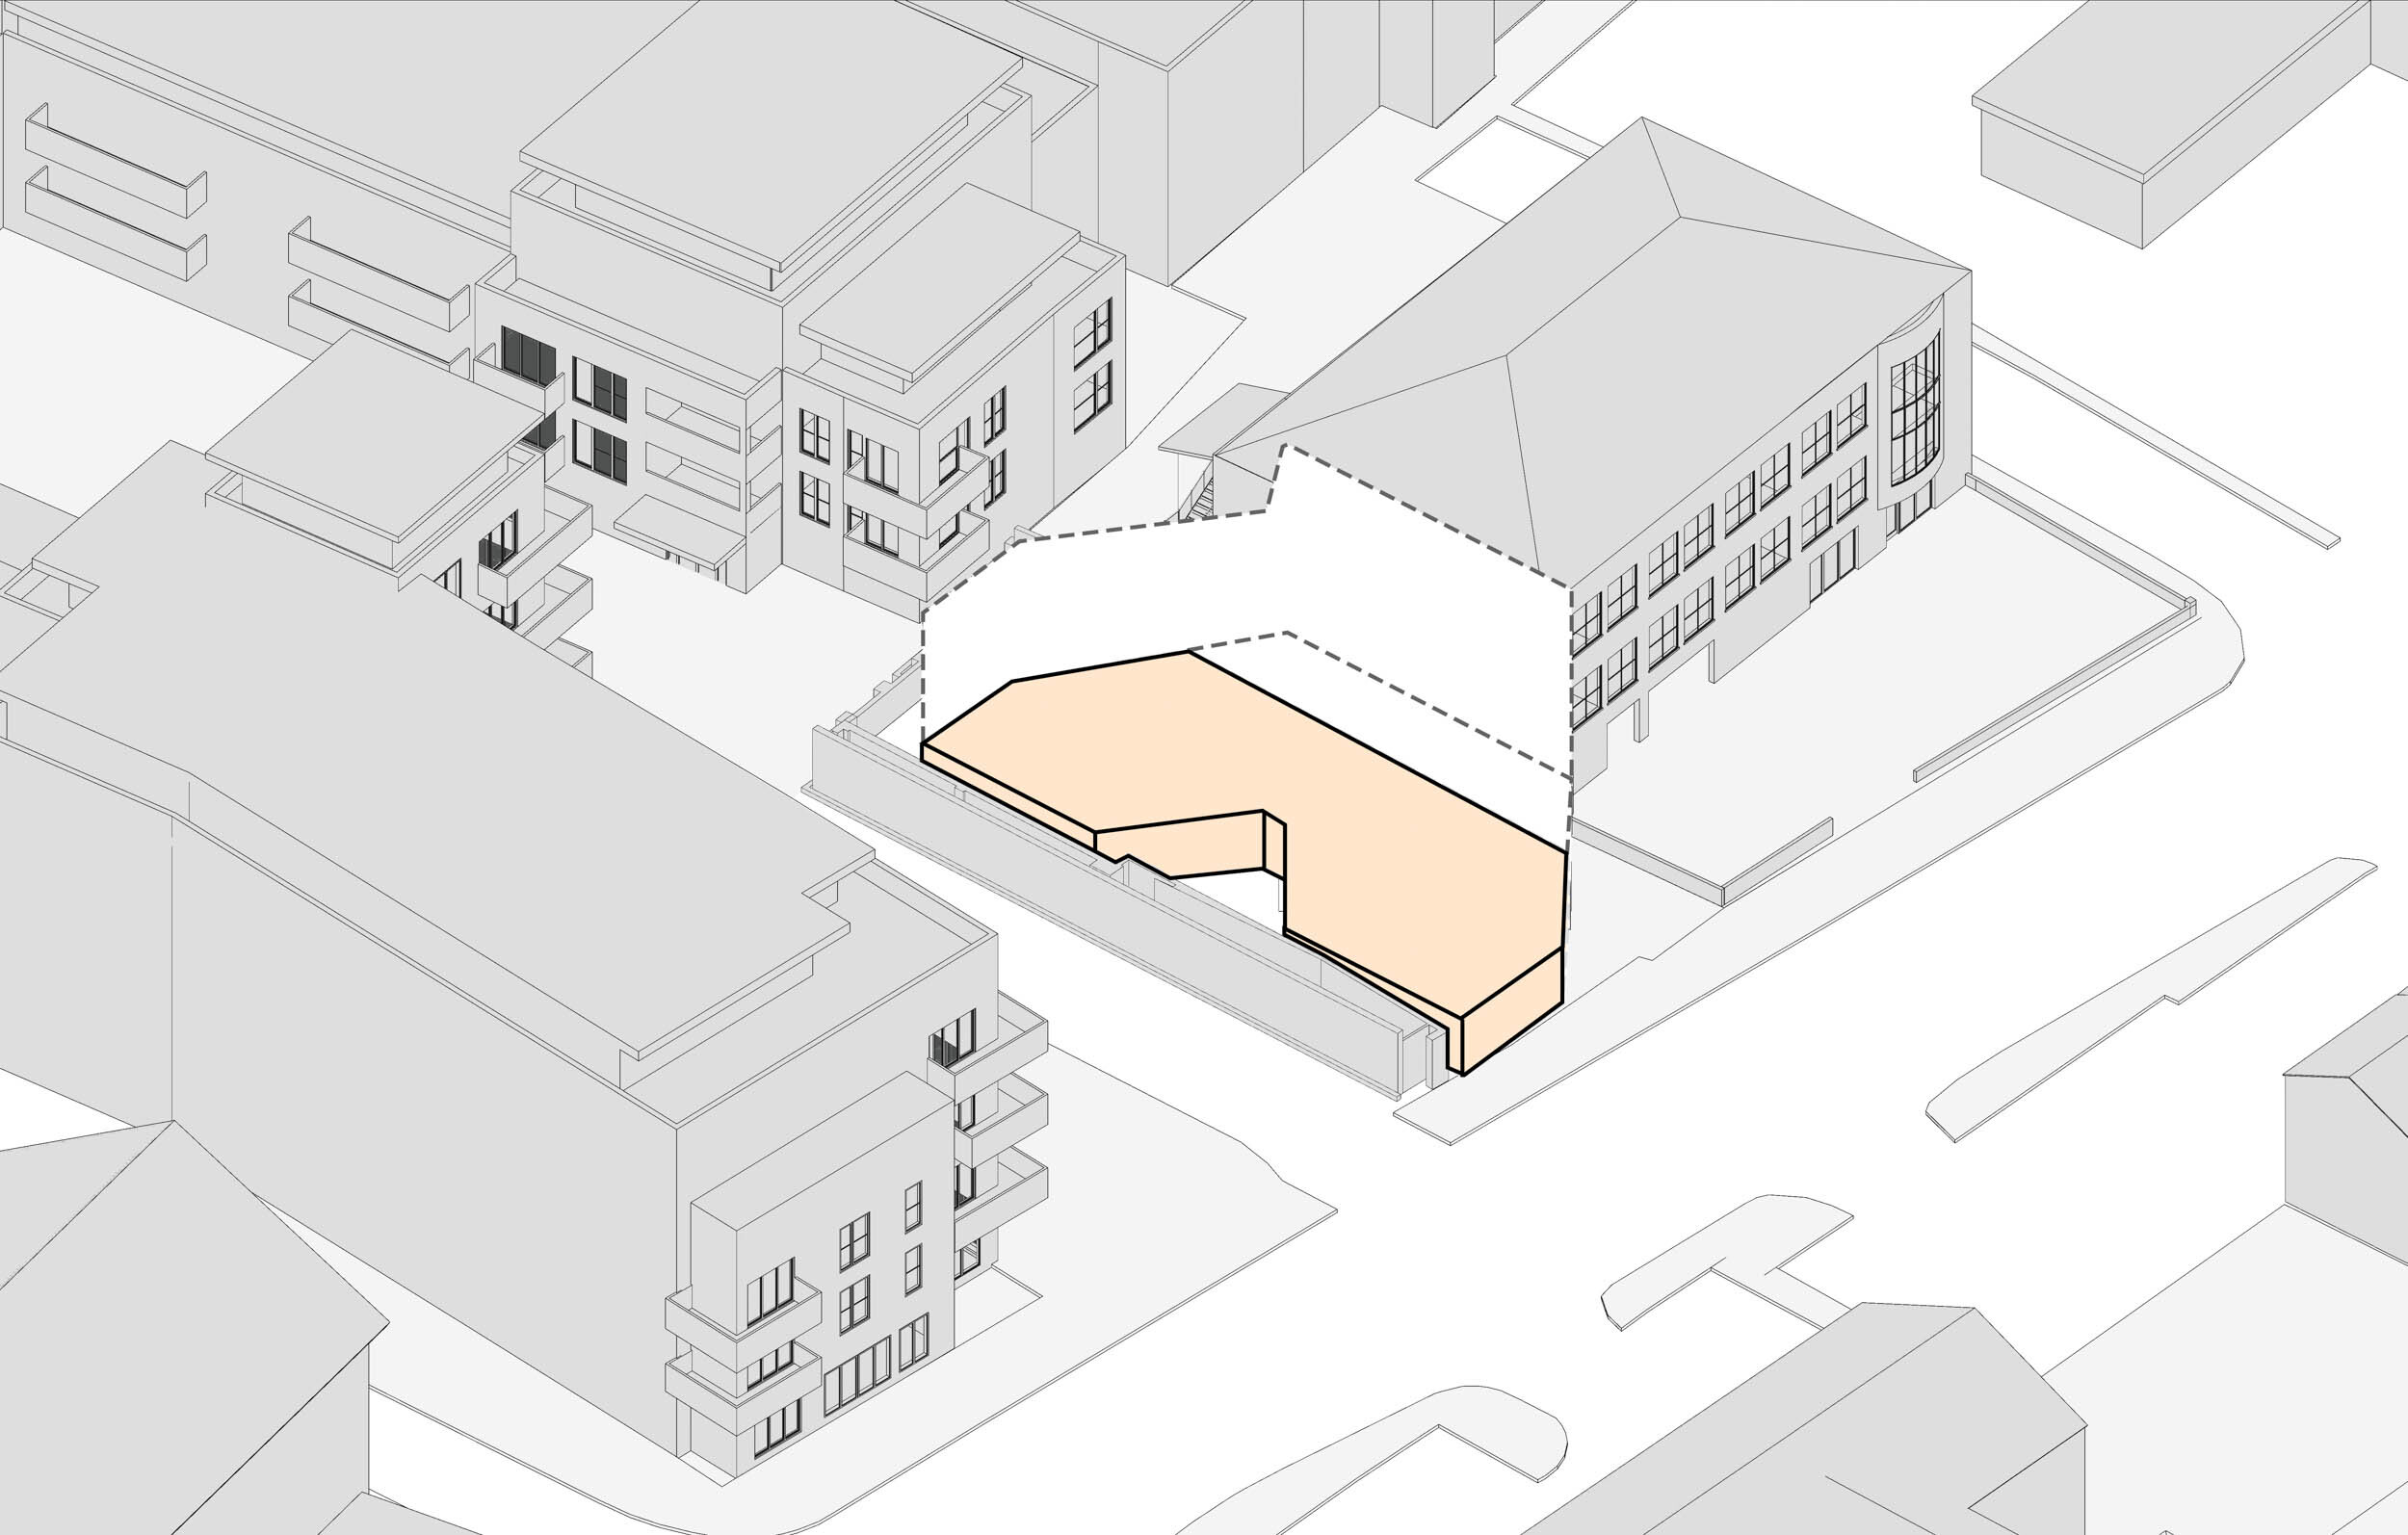 concept showing comercial unit newmarket road |  cambridge architects CDC Studio